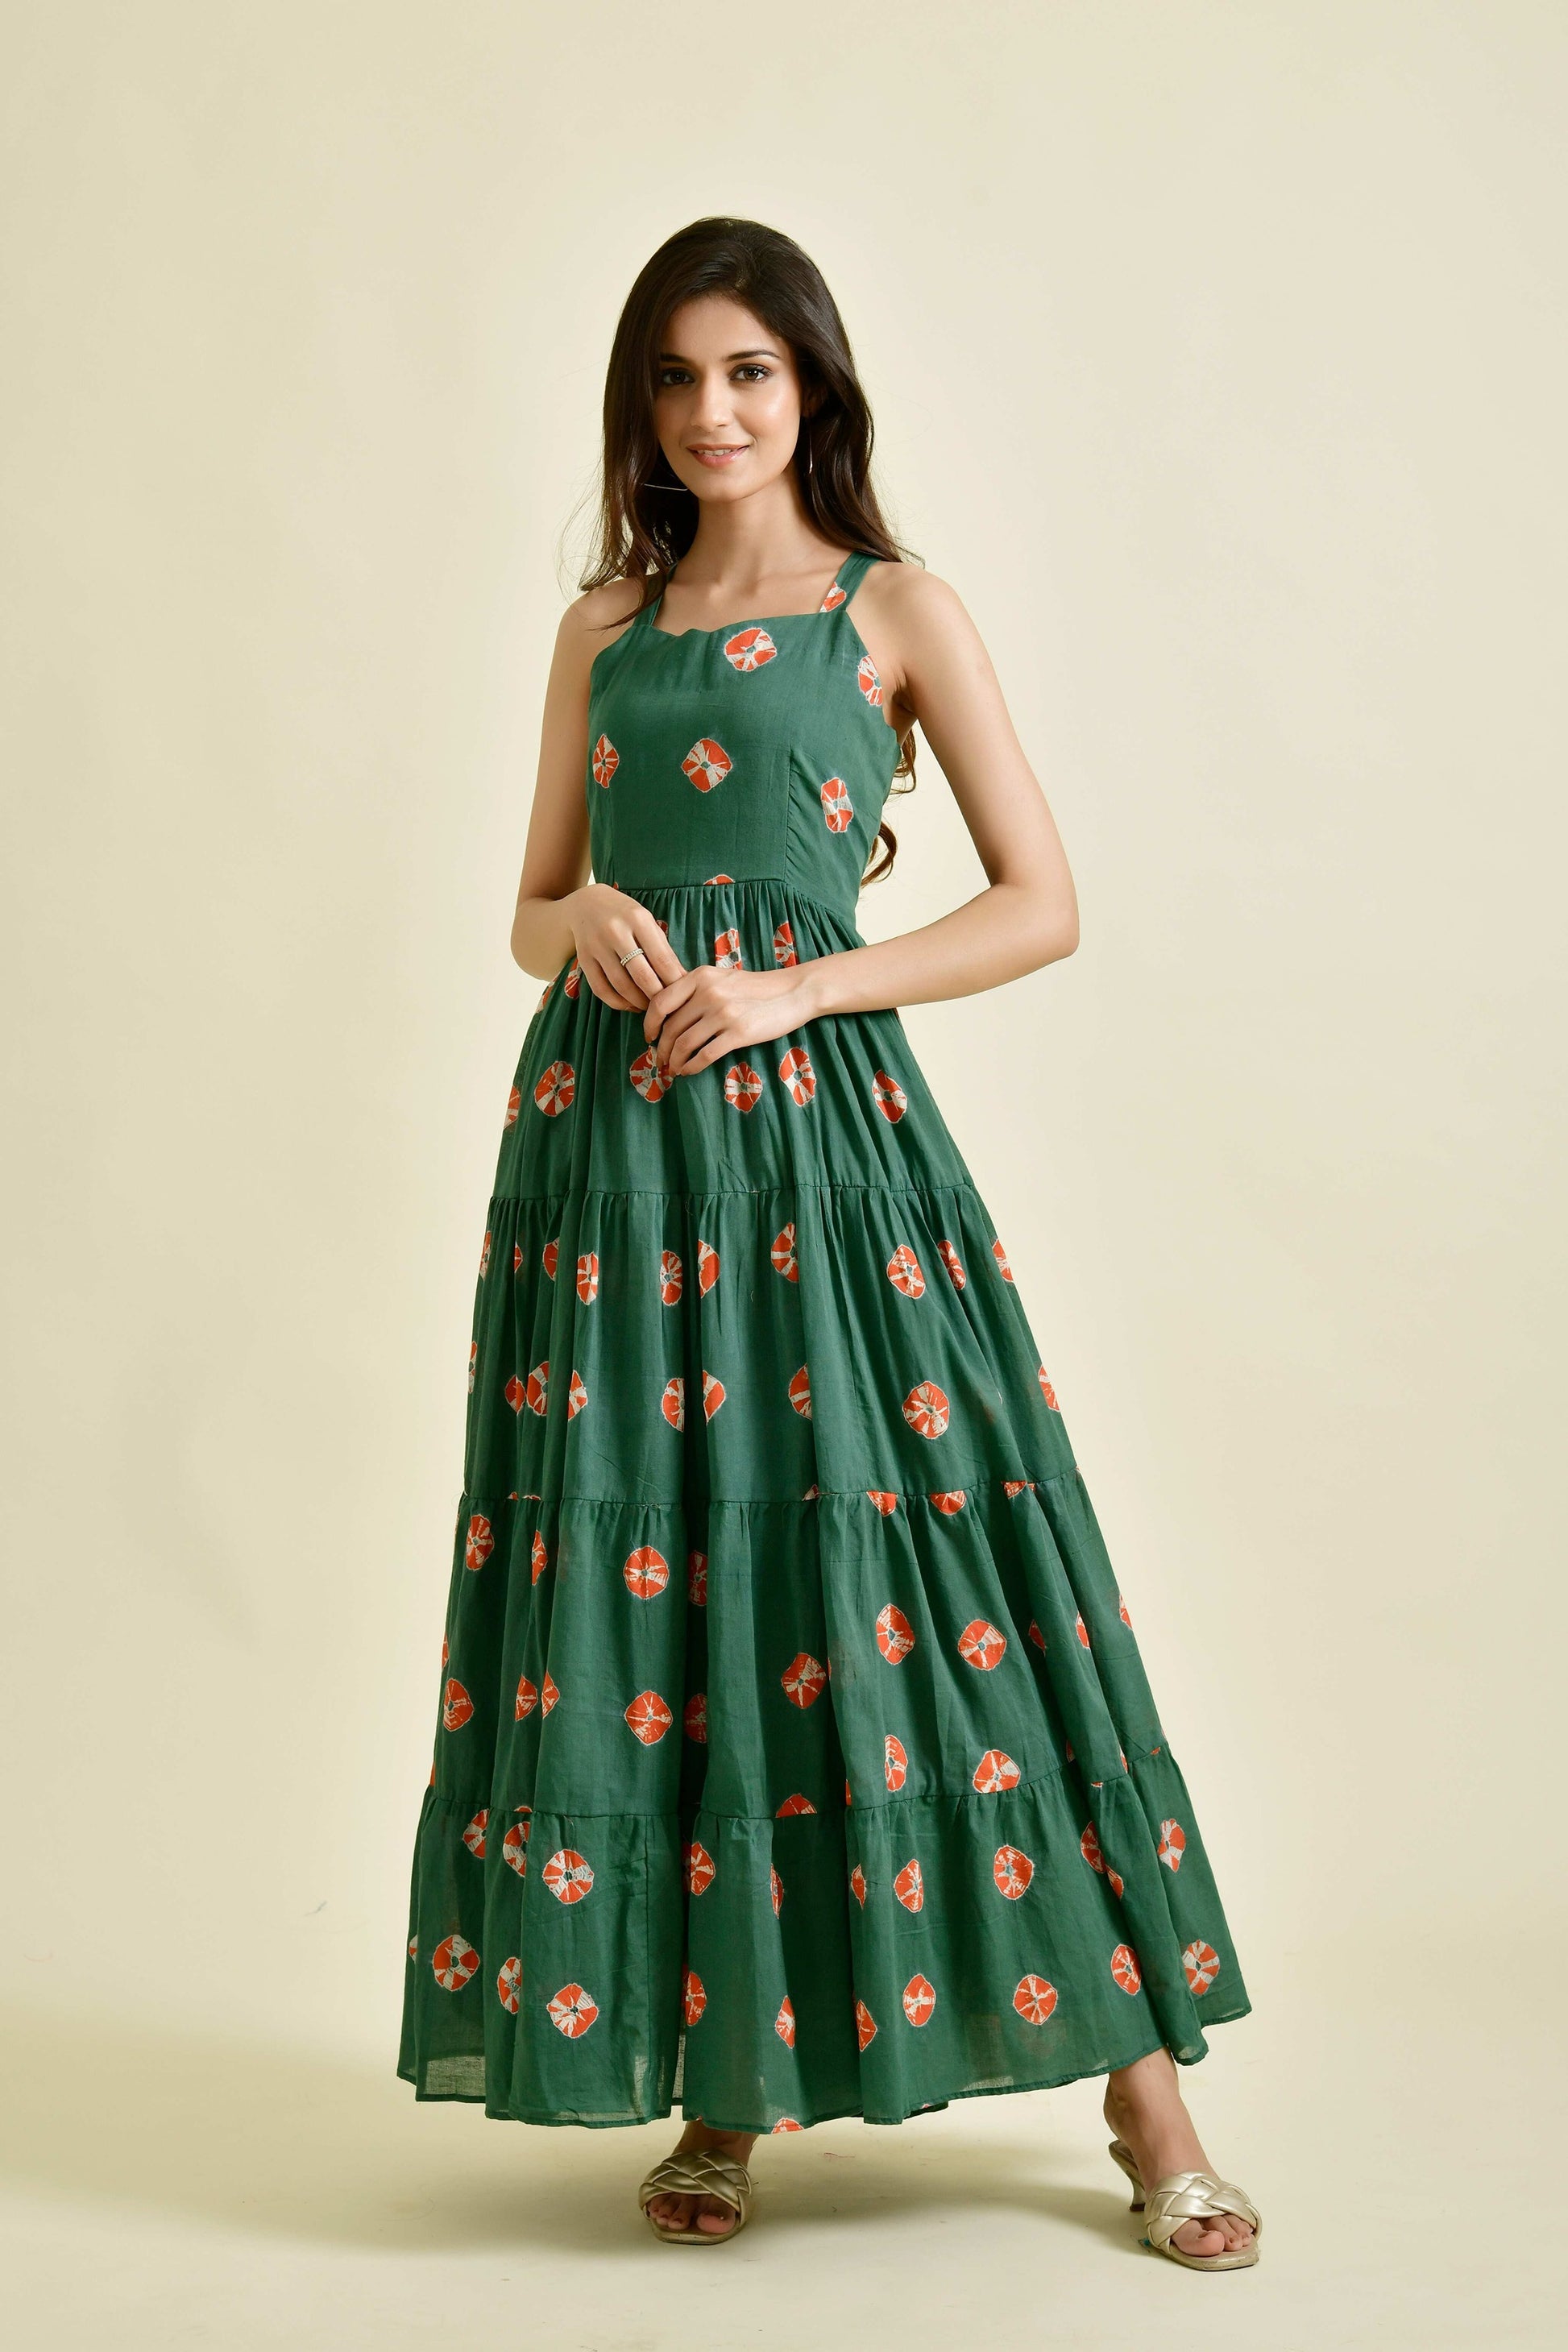 green shibori dress - www.styletriggers.com